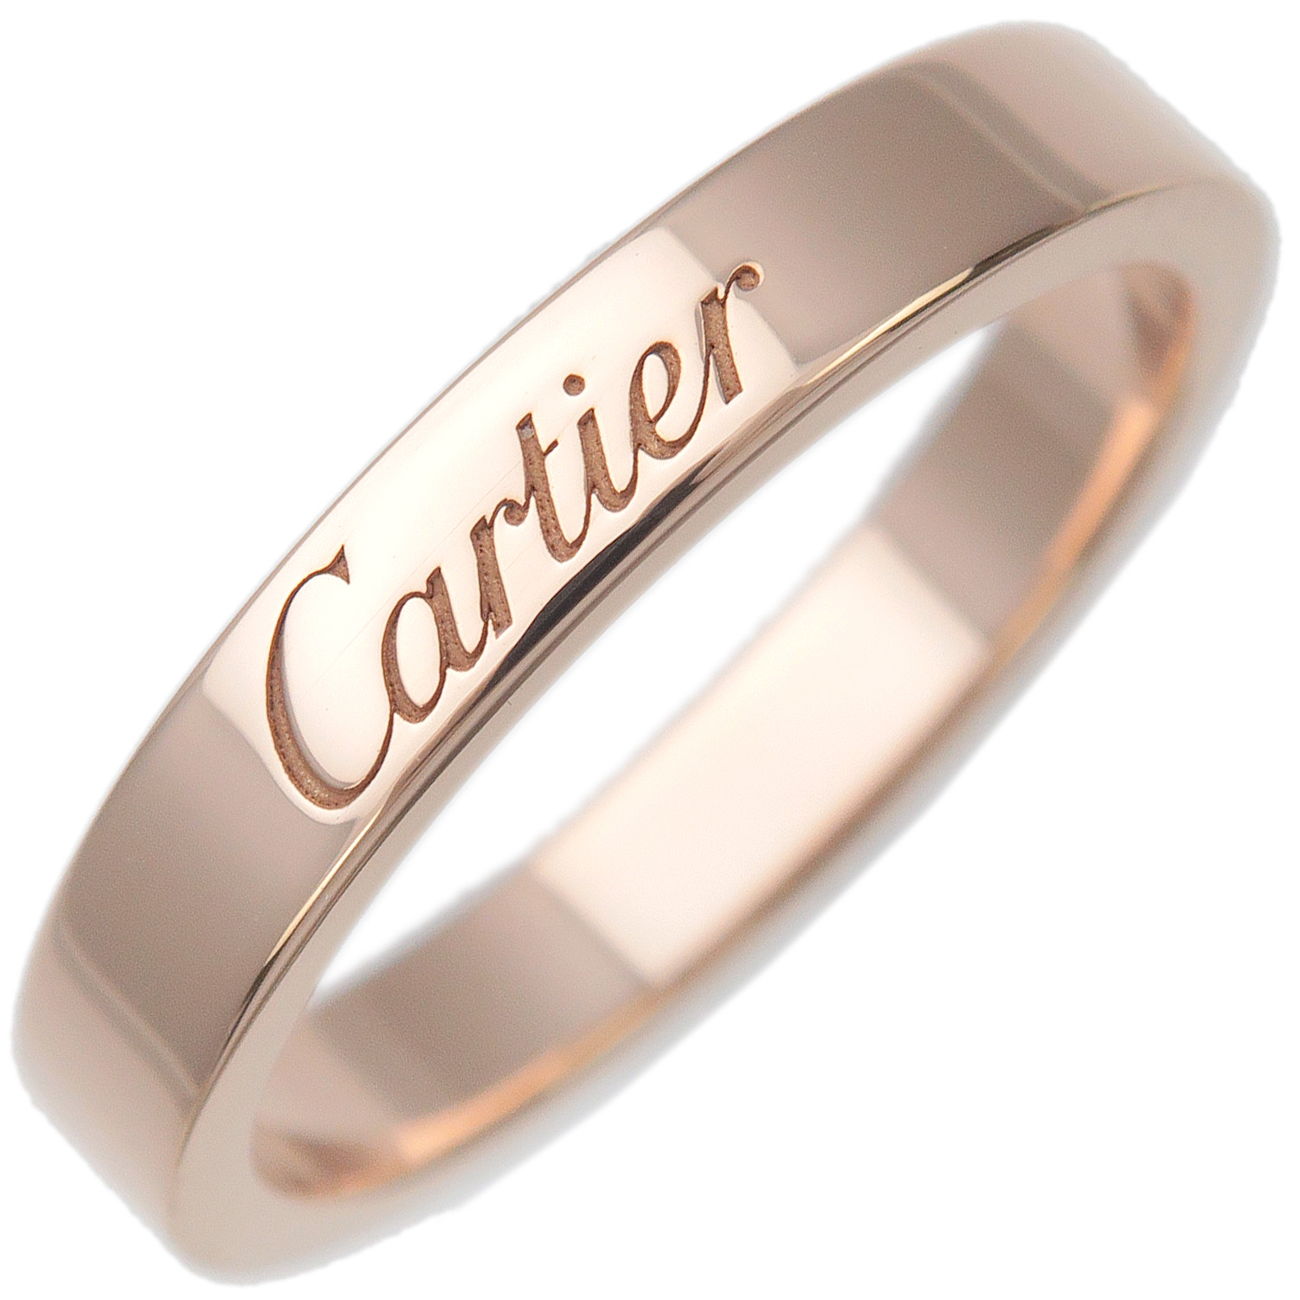 Cartier-Engraved-Ring-K18PG-750PG-Rose-Gold-#49-US5-EU49